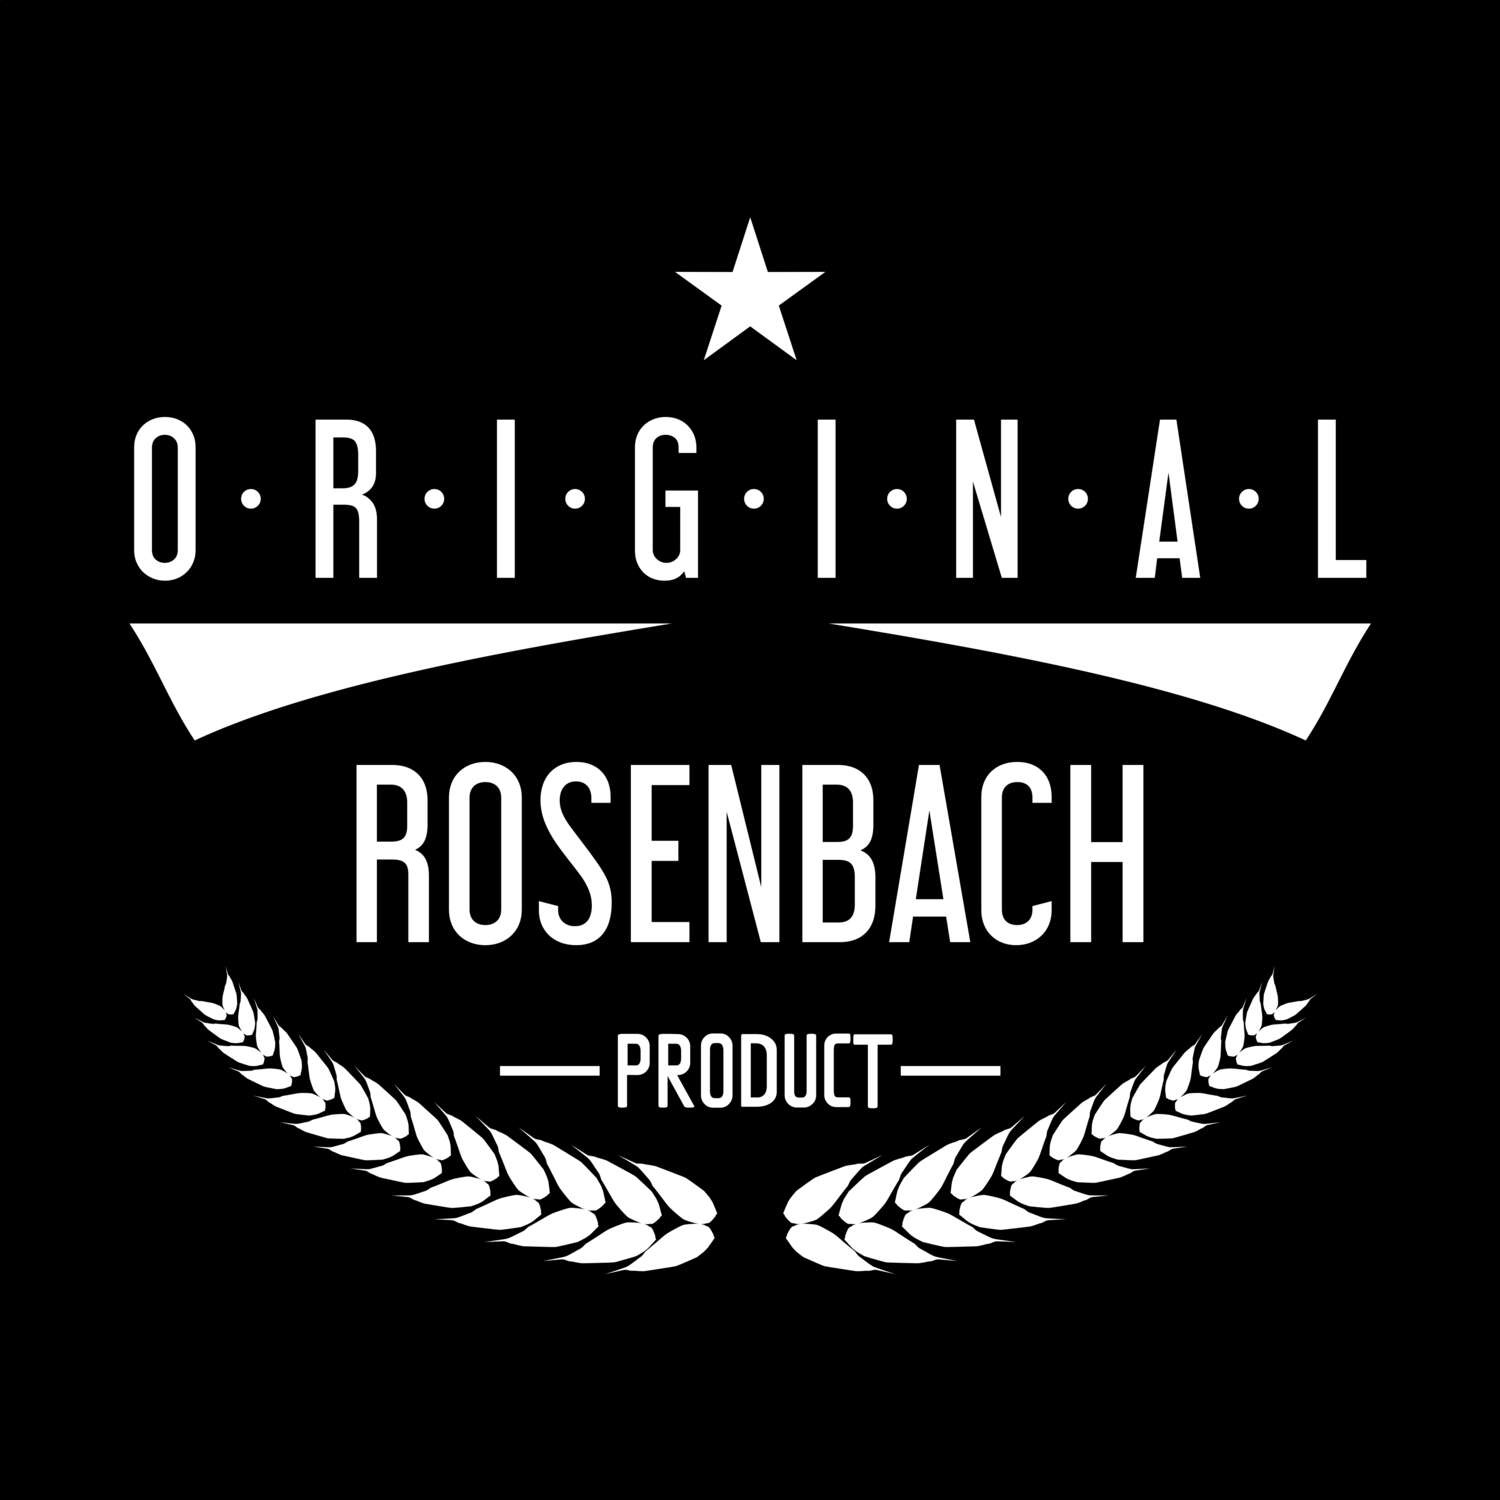 Rosenbach T-Shirt »Original Product«